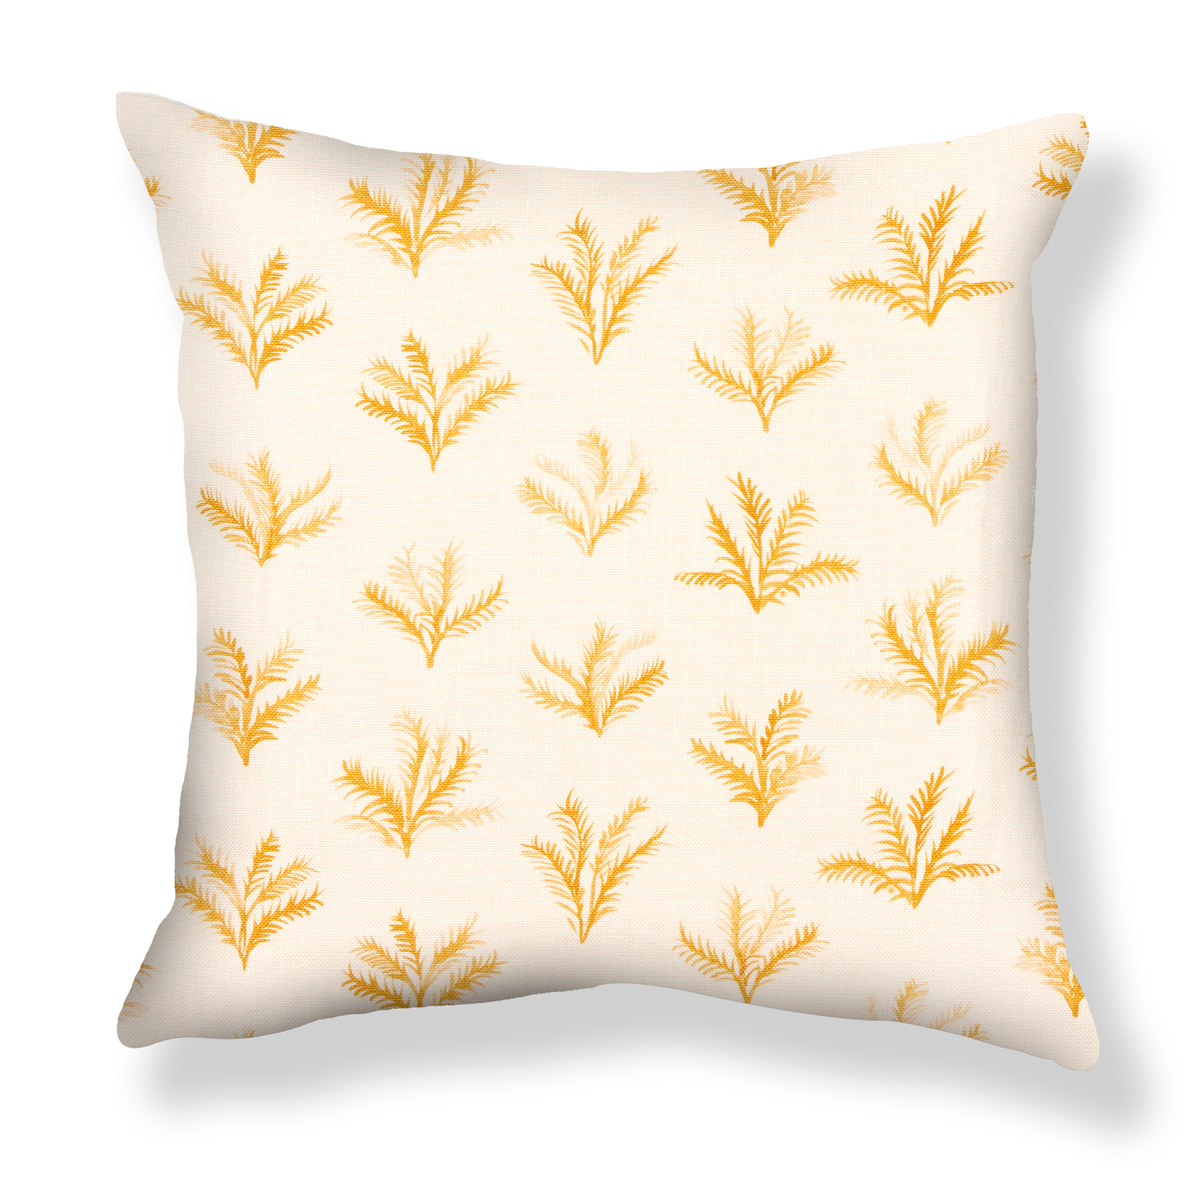 Little Palm Pillow in Goldenrod